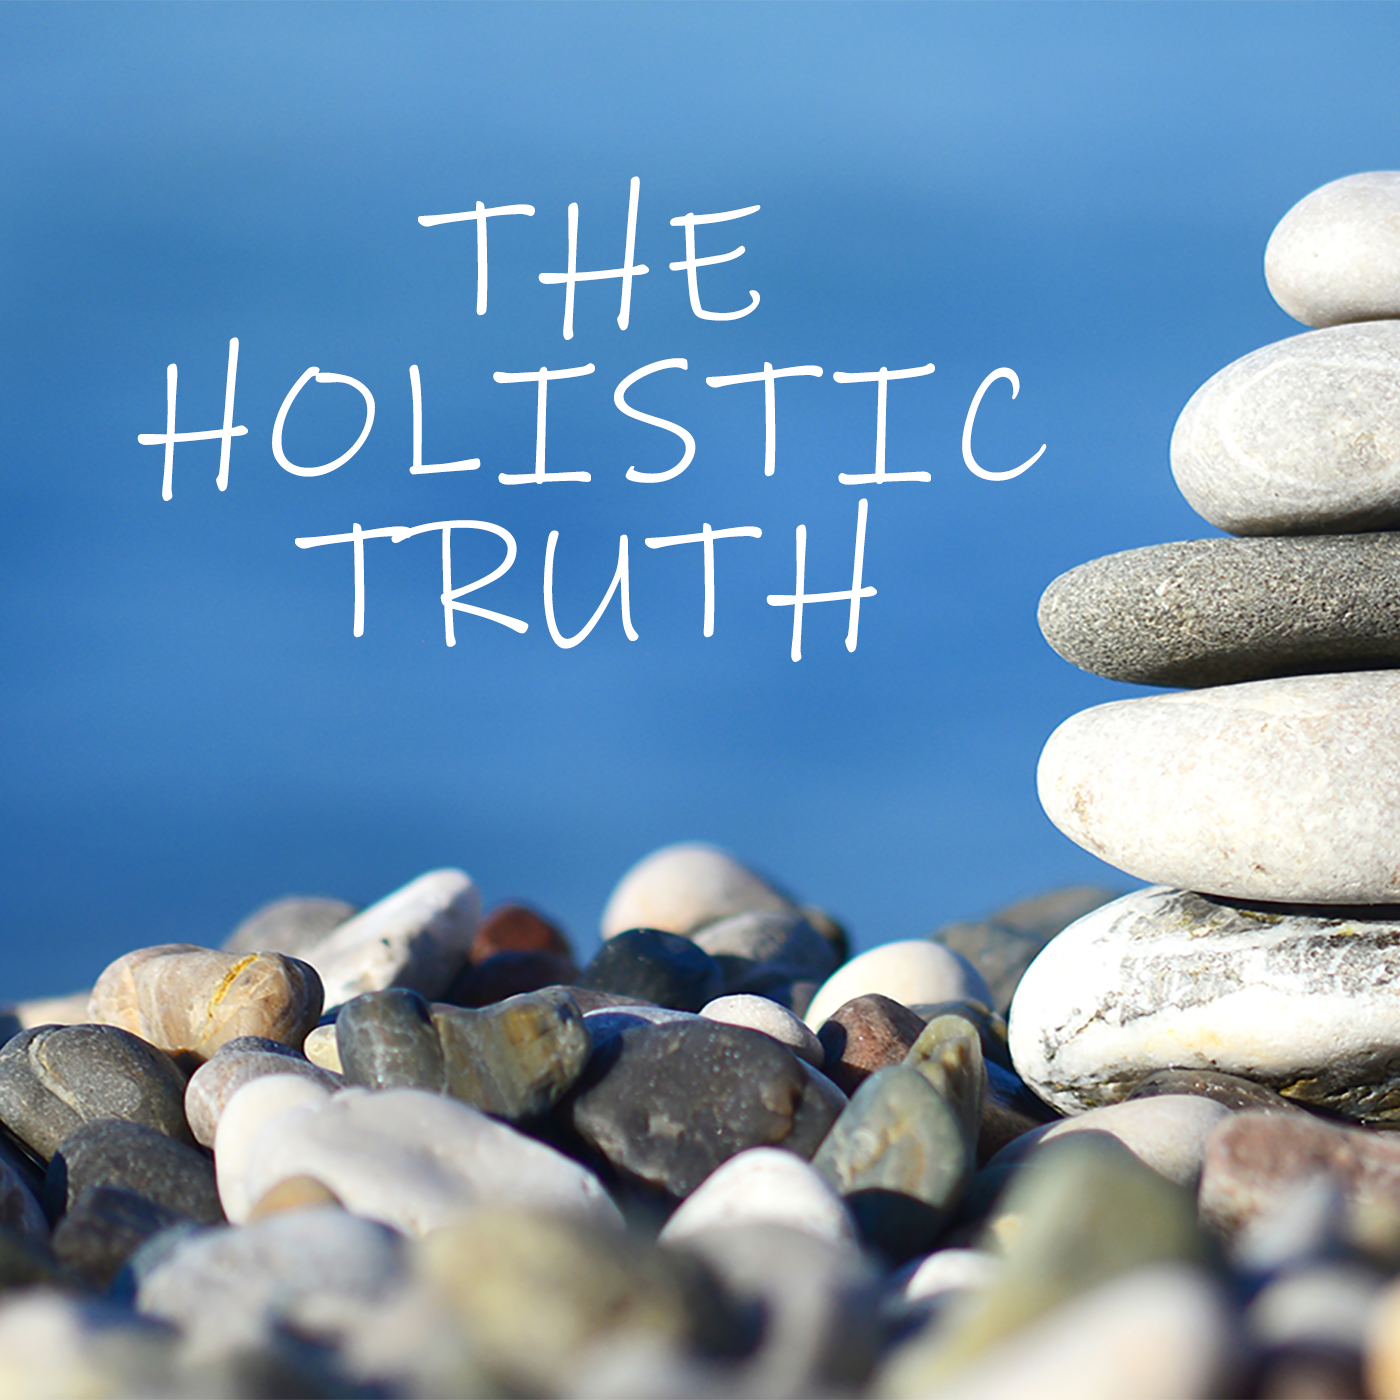 The Holistic Truth 9/18/21